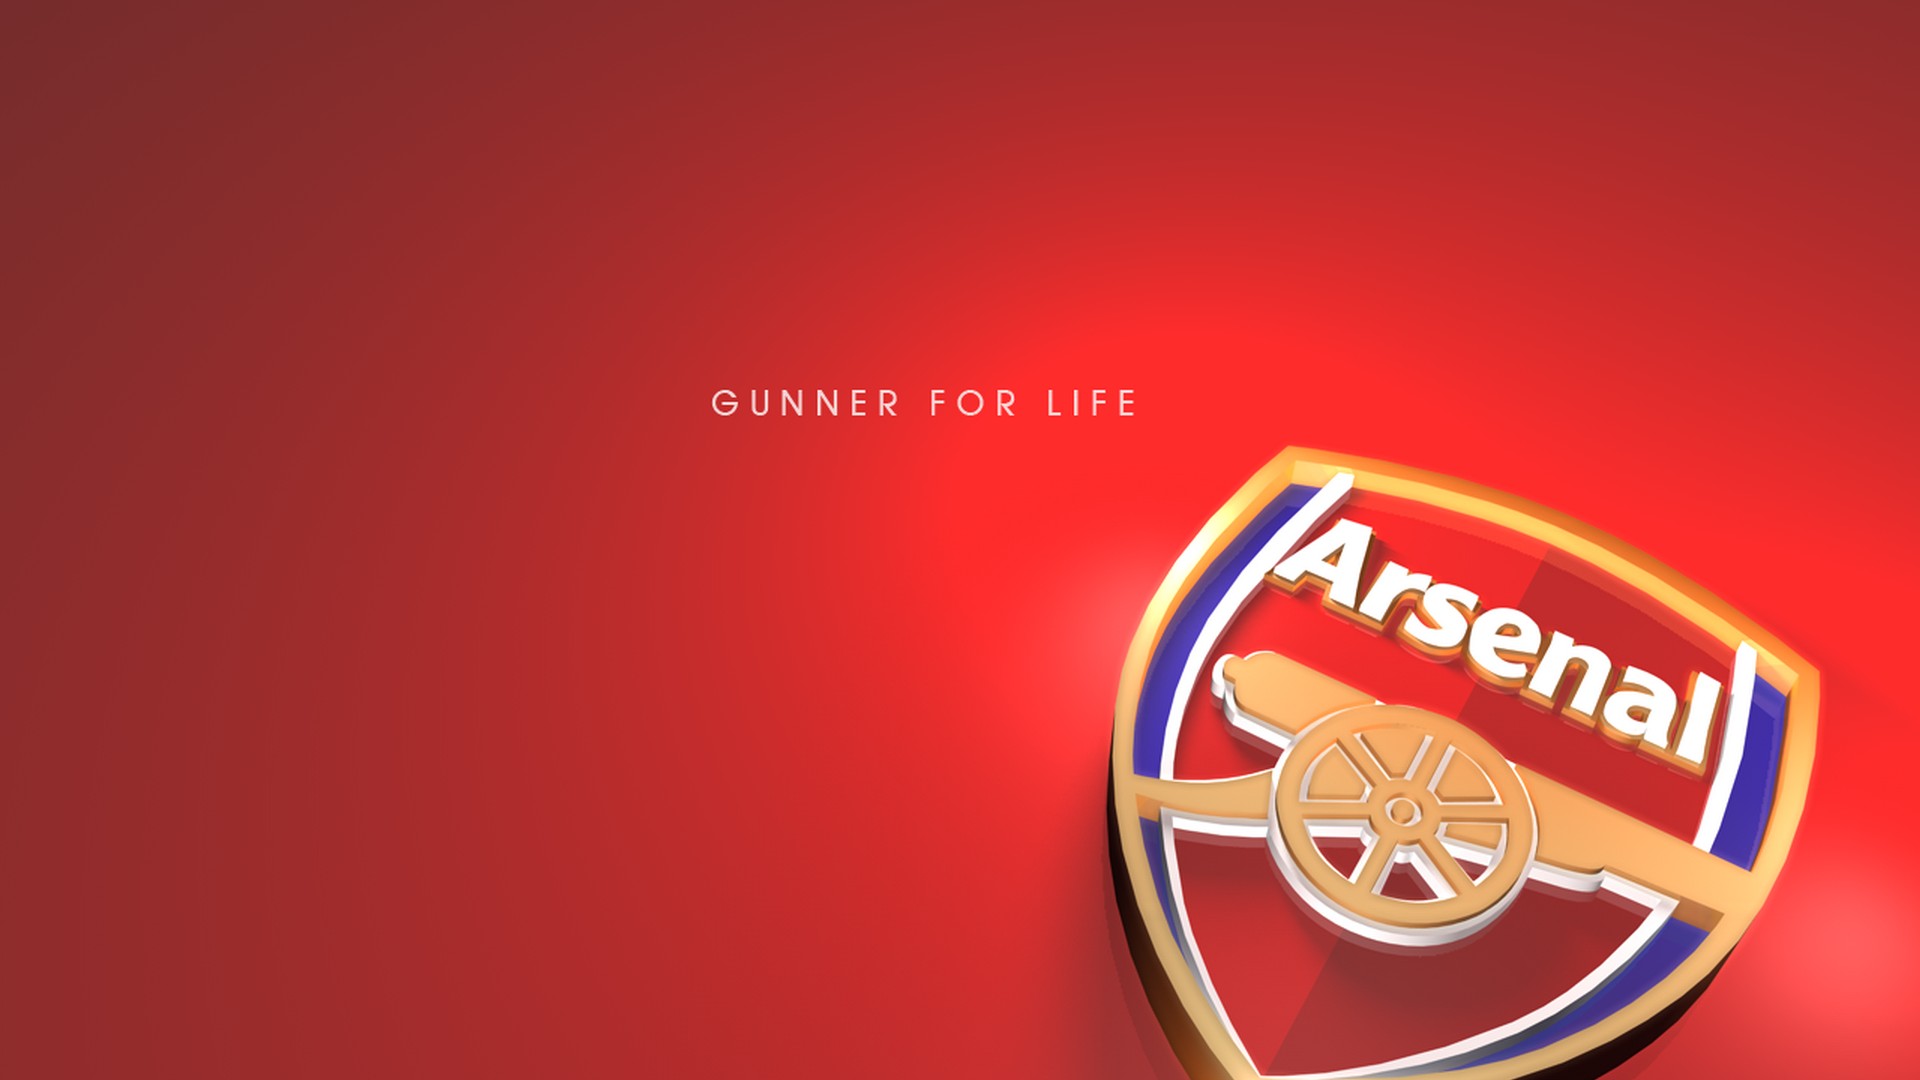 Arsenal Wallpaper For Mac 2020 Football Wallpaper